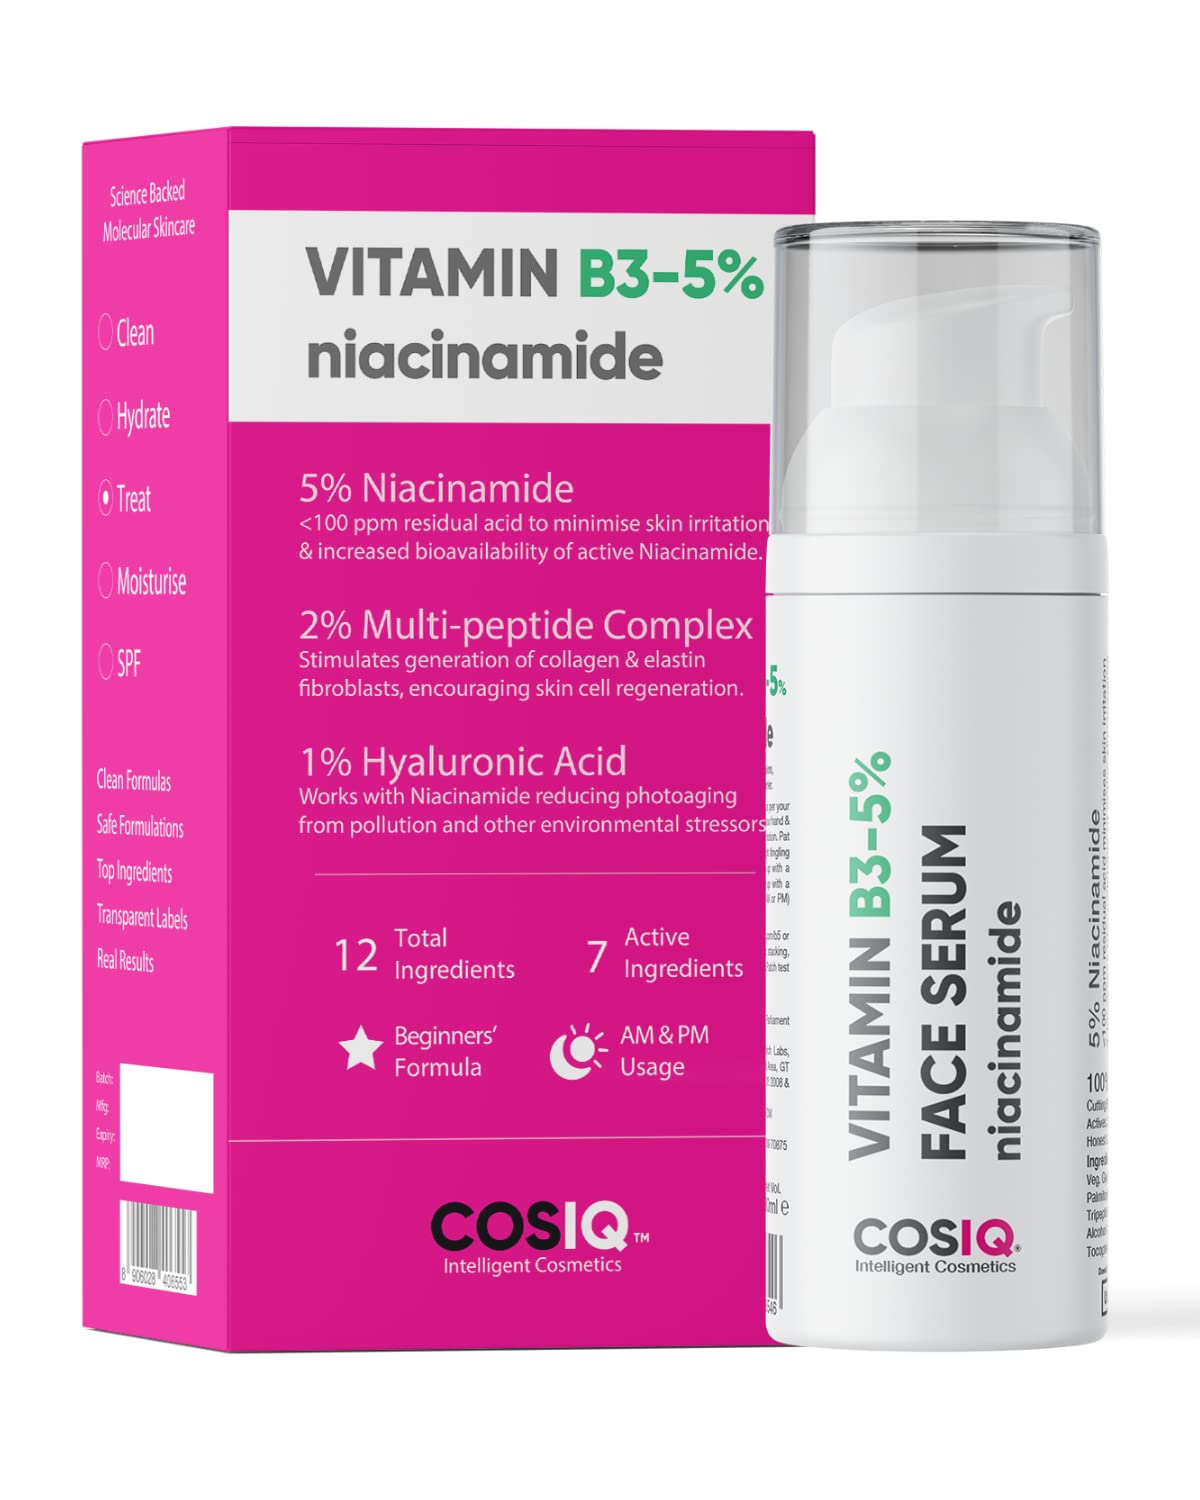 Niacinamide Vitamin B3-5% Serum, 30ml - CosIQ